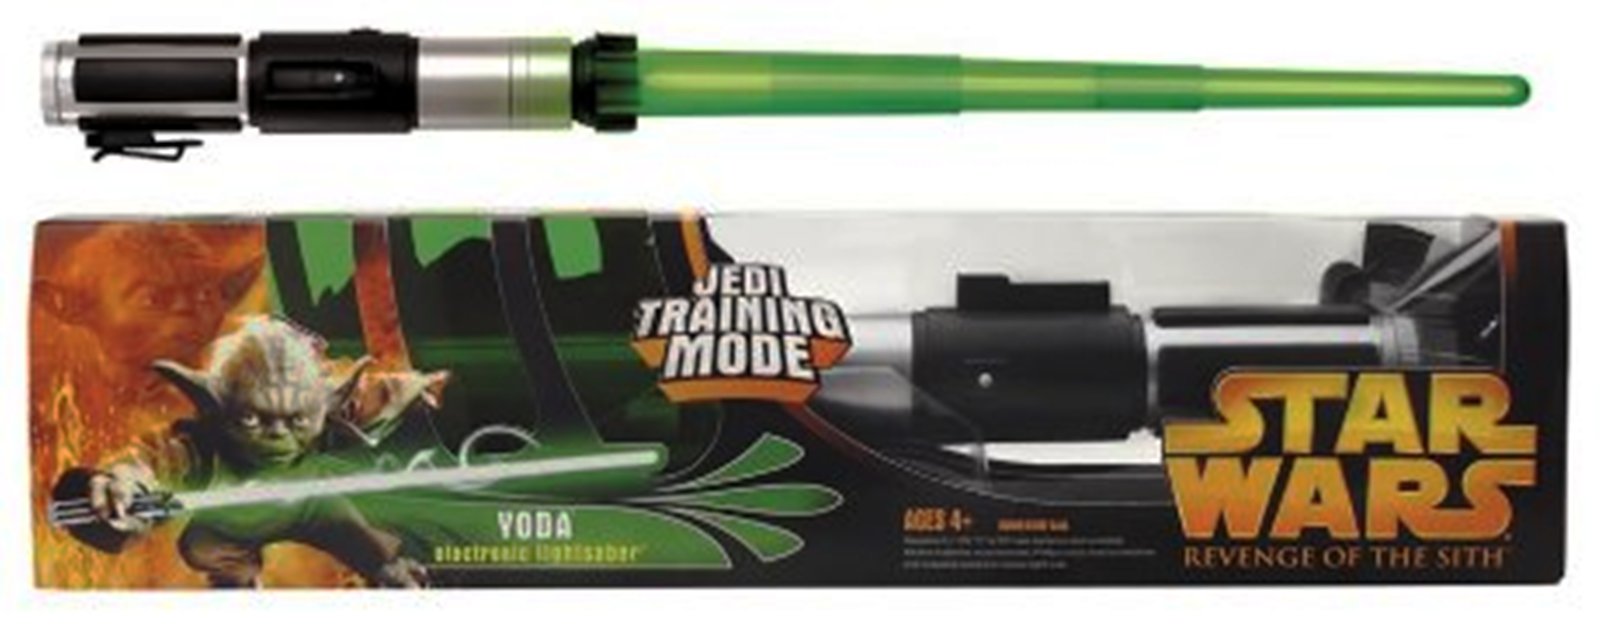 Yoda “Jedi Training Mode” Electronic Lightsaber (Star Wars 